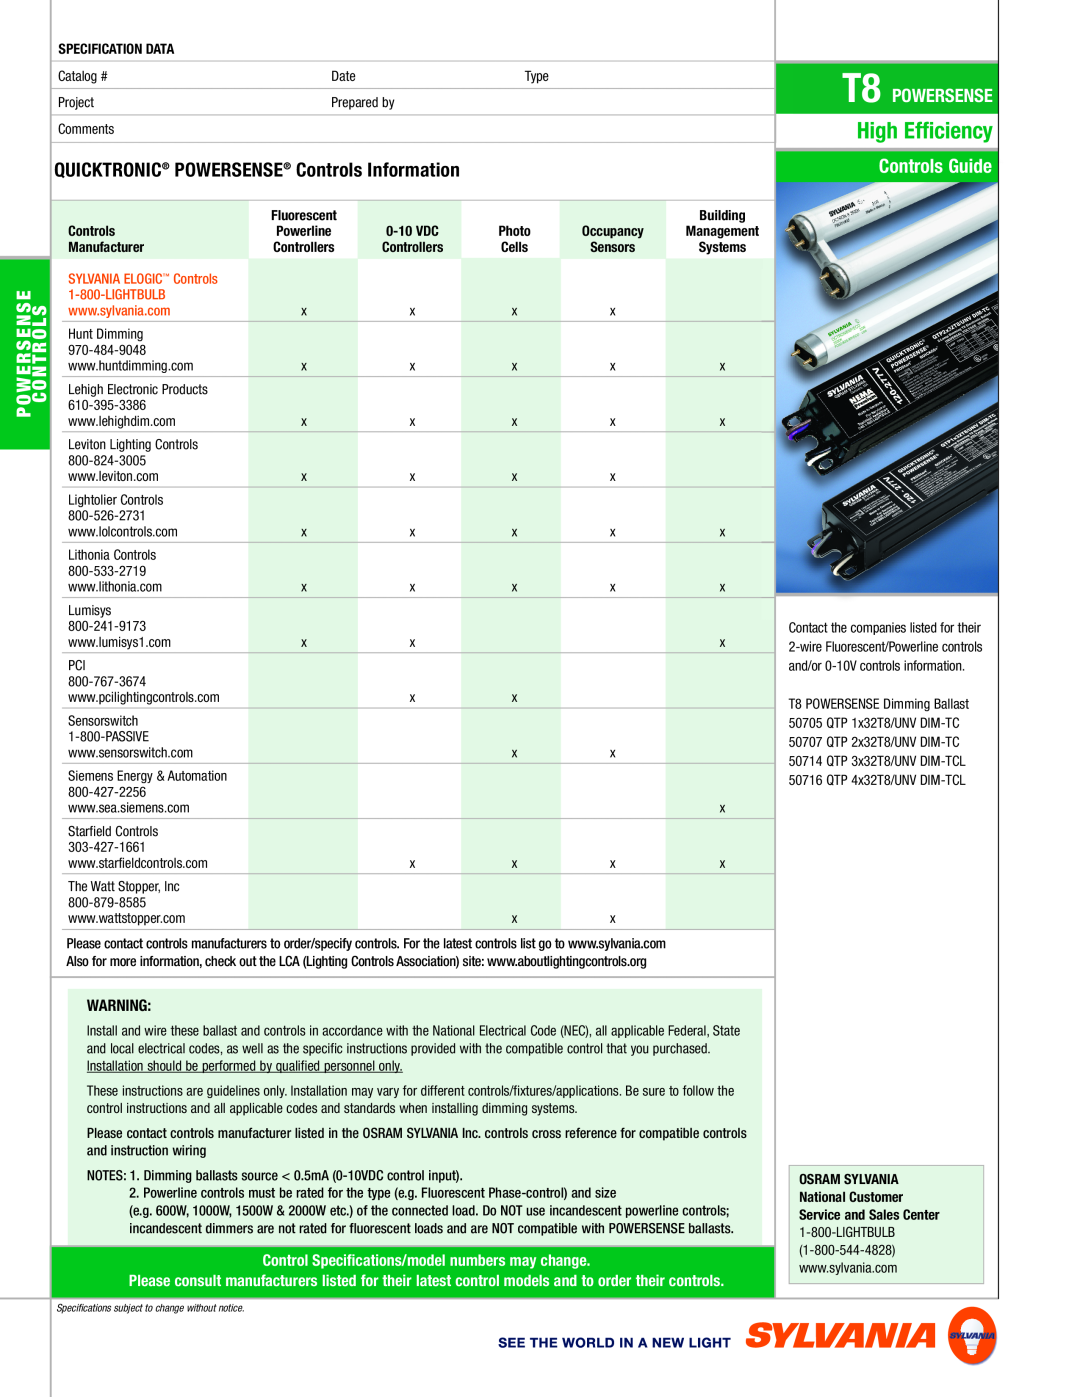 Sylvania High Efﬁciency, Controls Guide, T8 POWERSENSE, QUICKTRONIC POWERSENSE Controls Information, Specification Data 